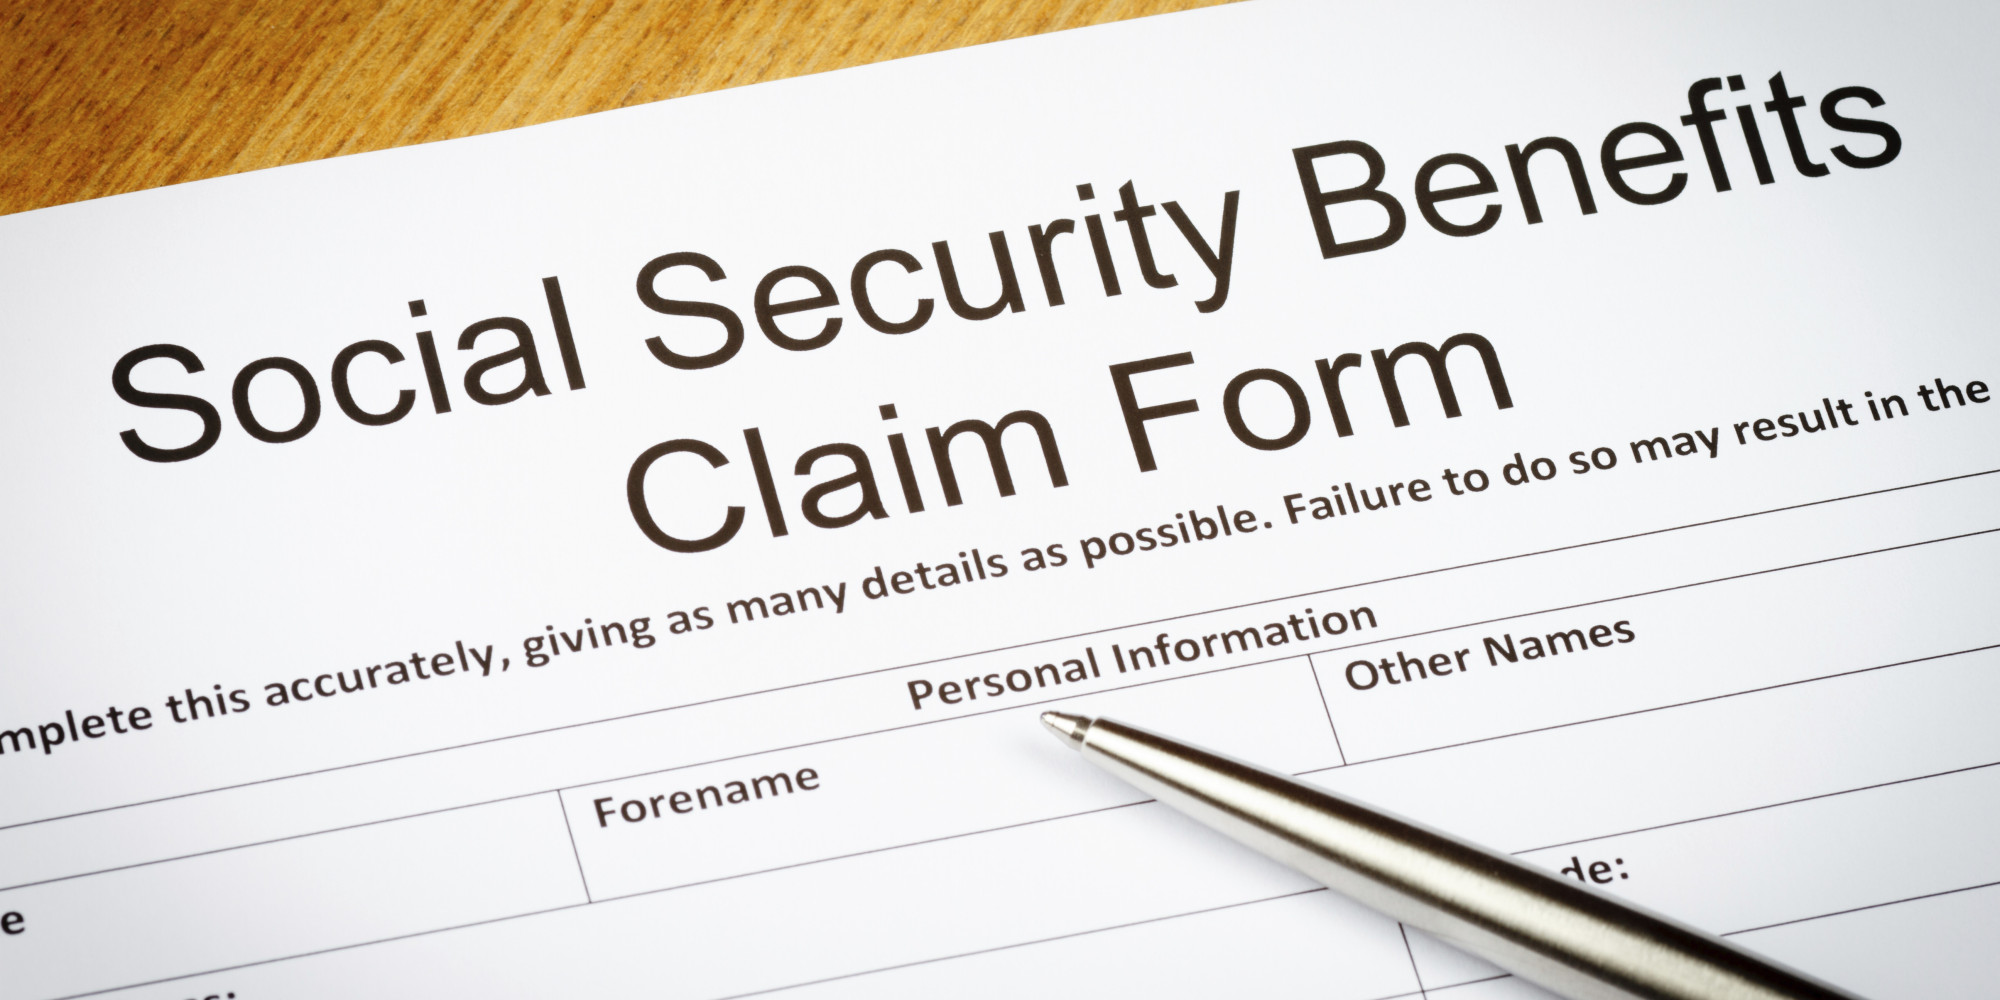 Social Security Benefits claim form